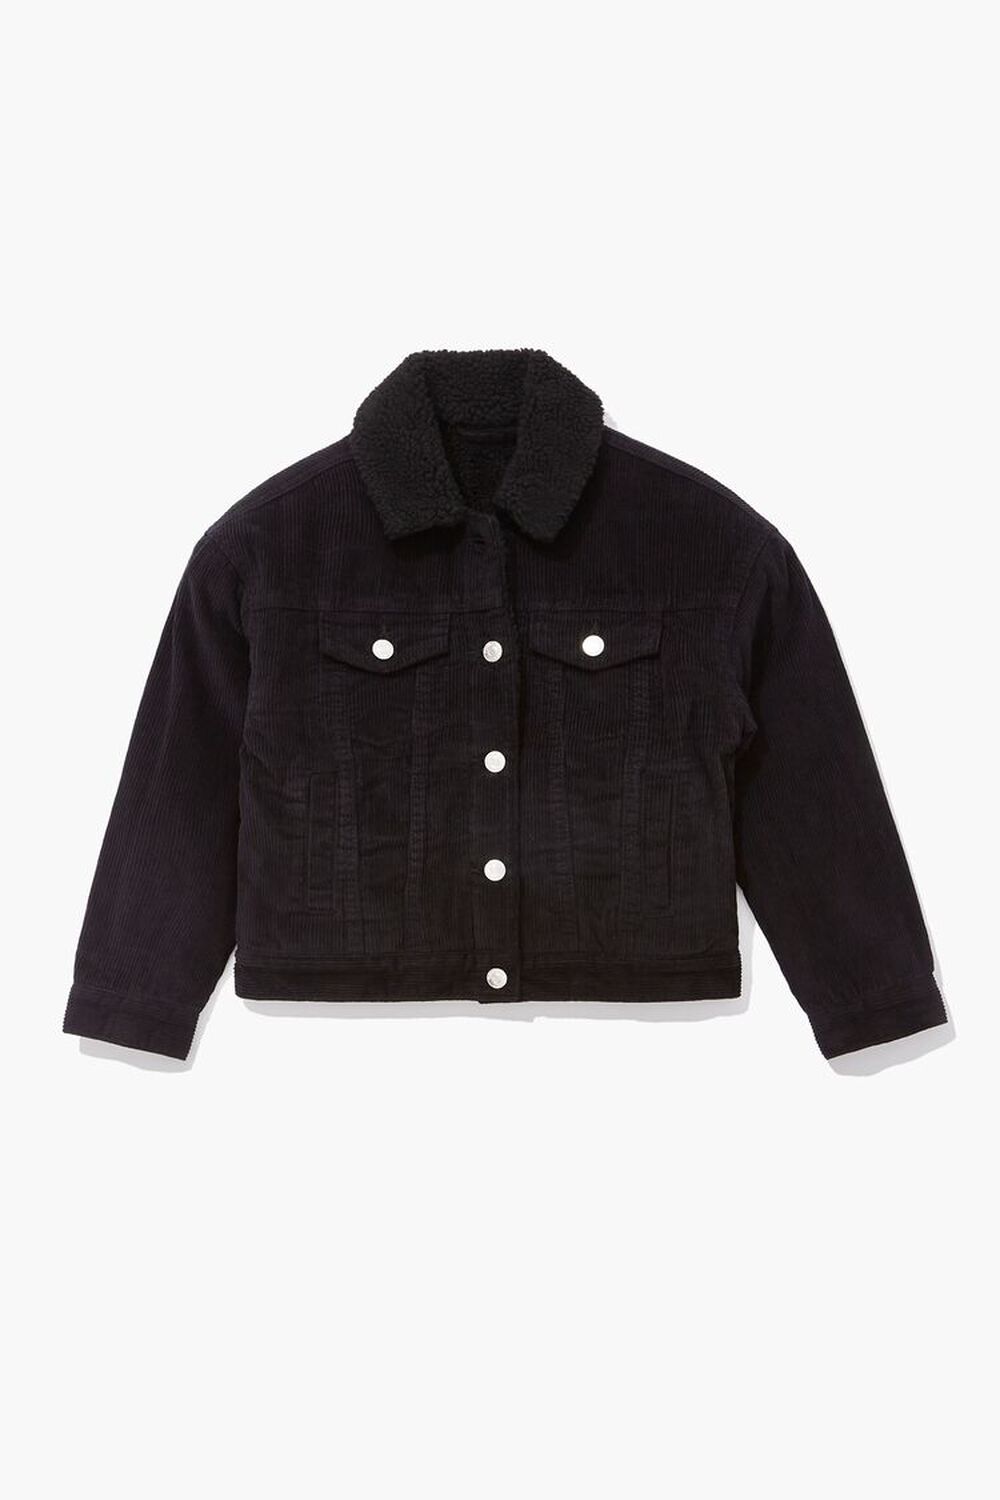 BLACK Kids Corduroy Buttoned Jacket (Girls + Boys), image 1